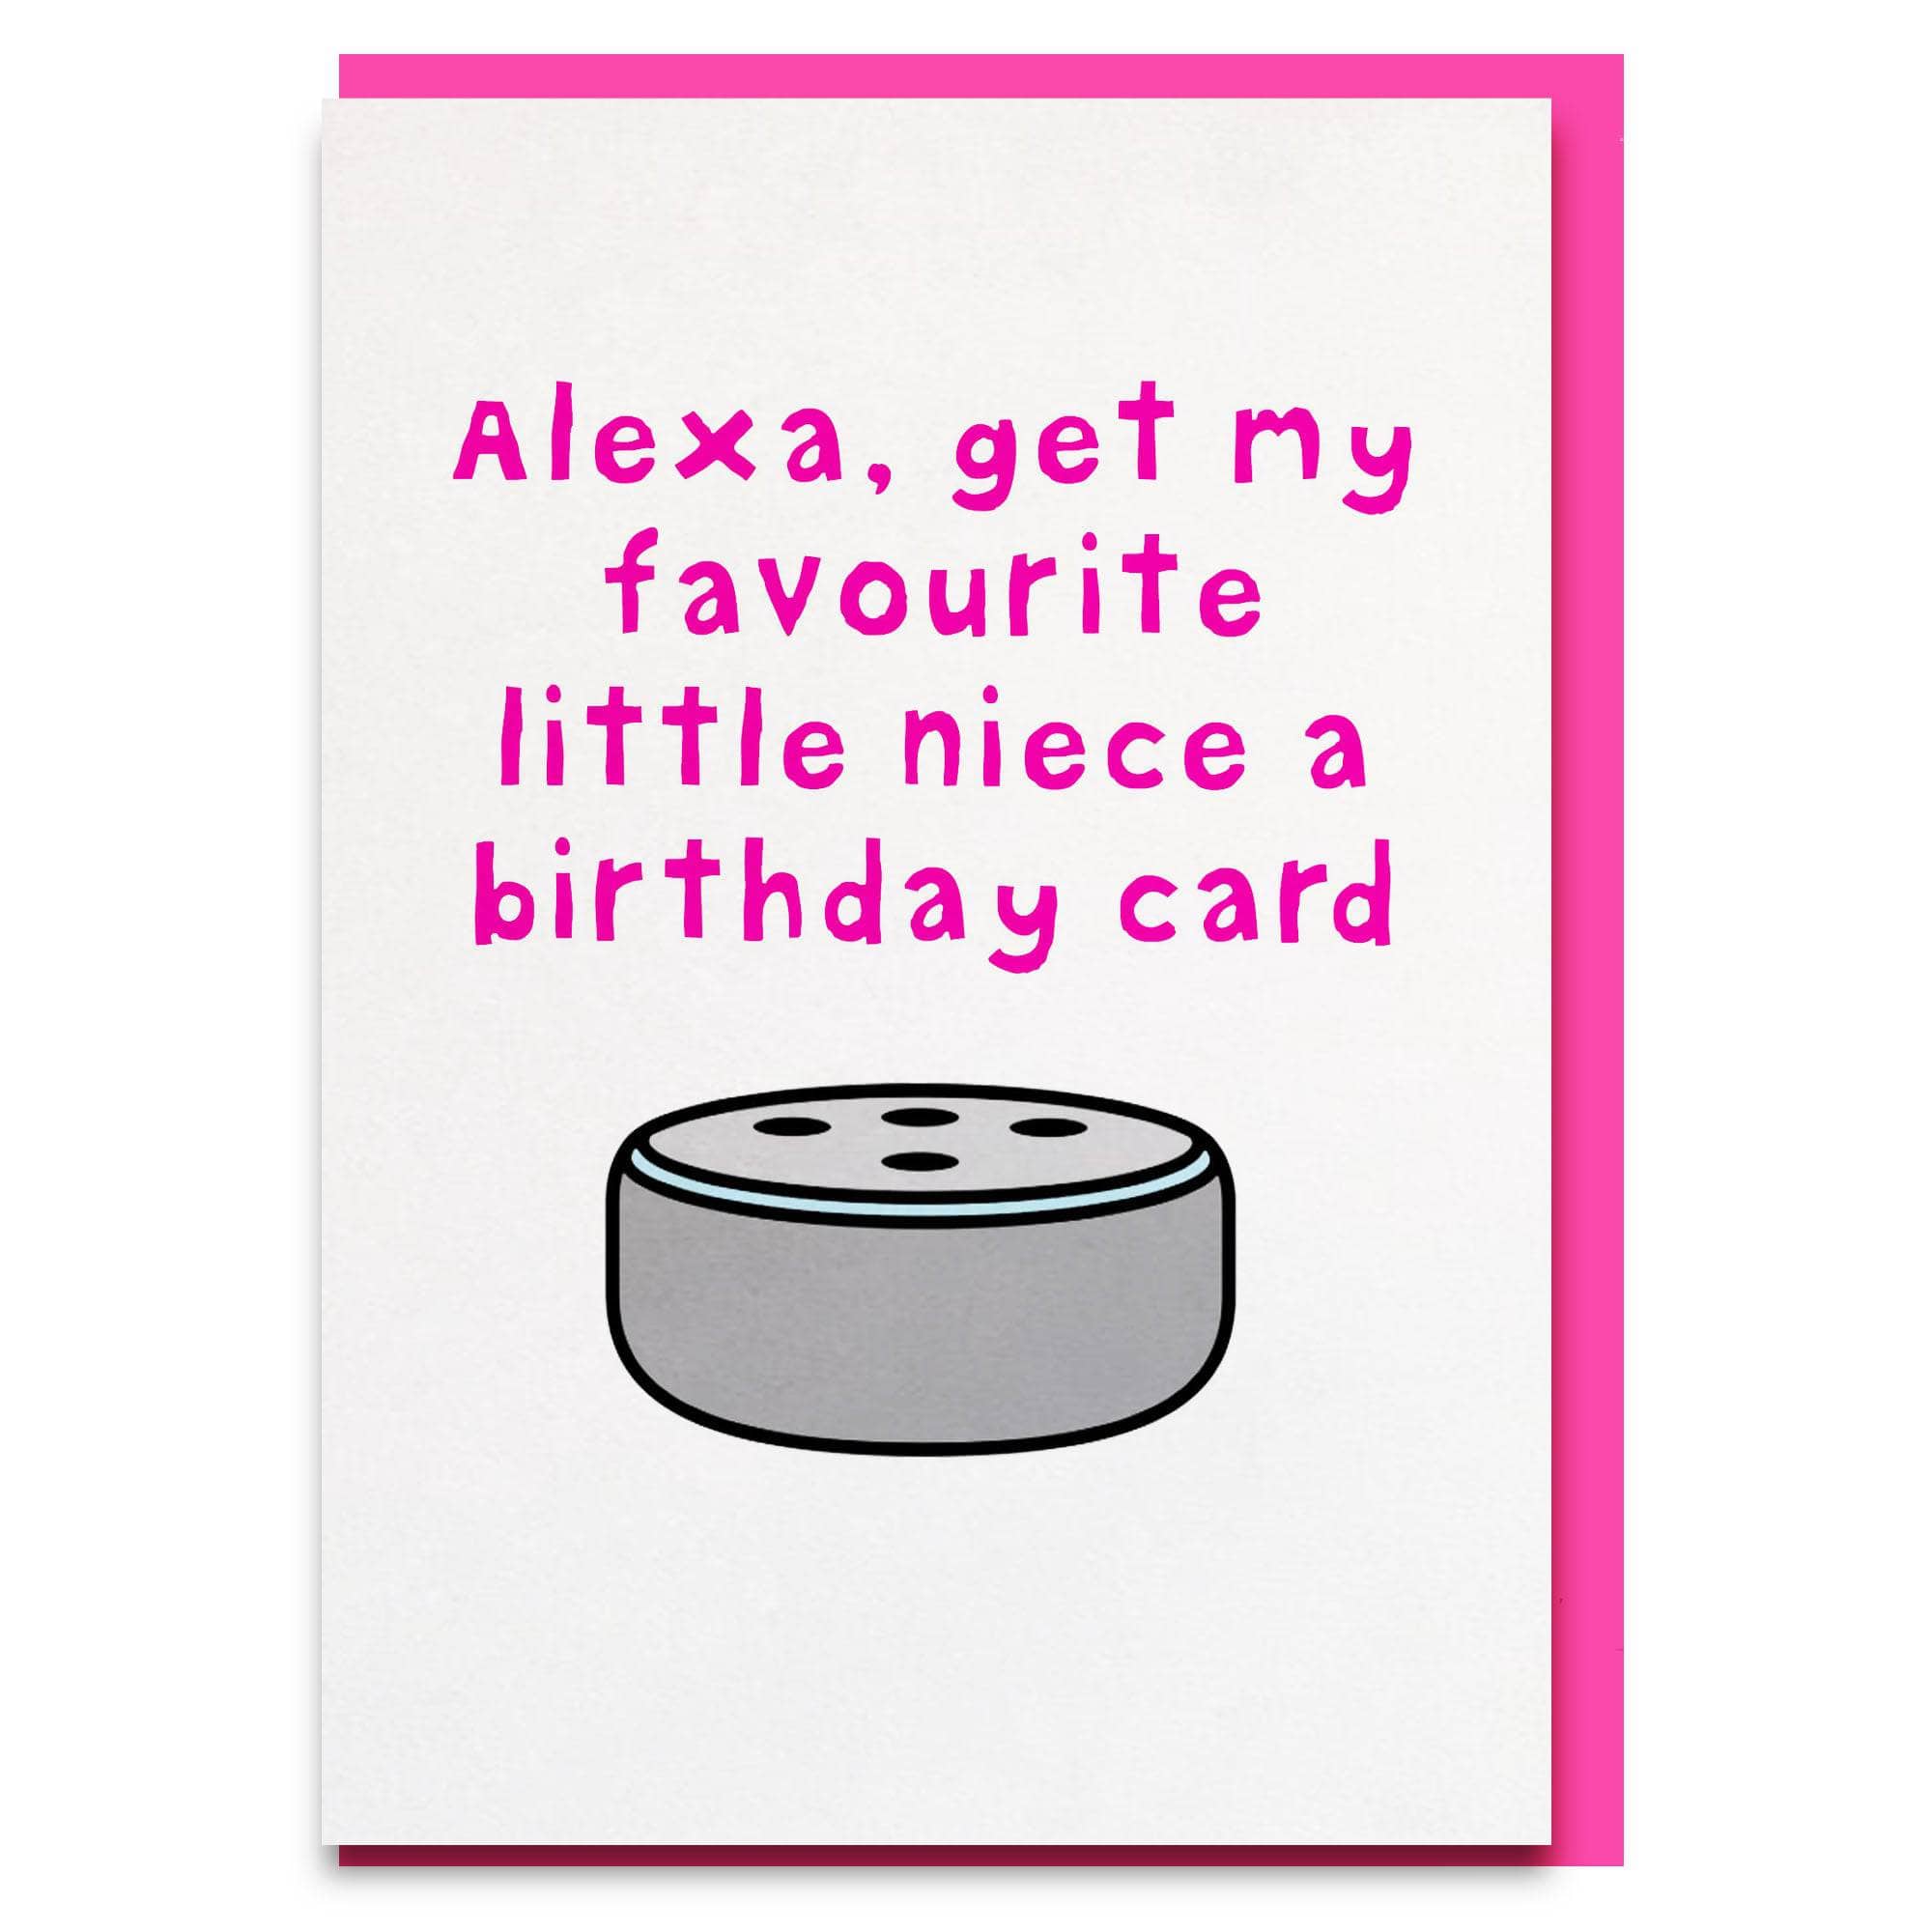 Funny and sweet Alexa niece birthday card!